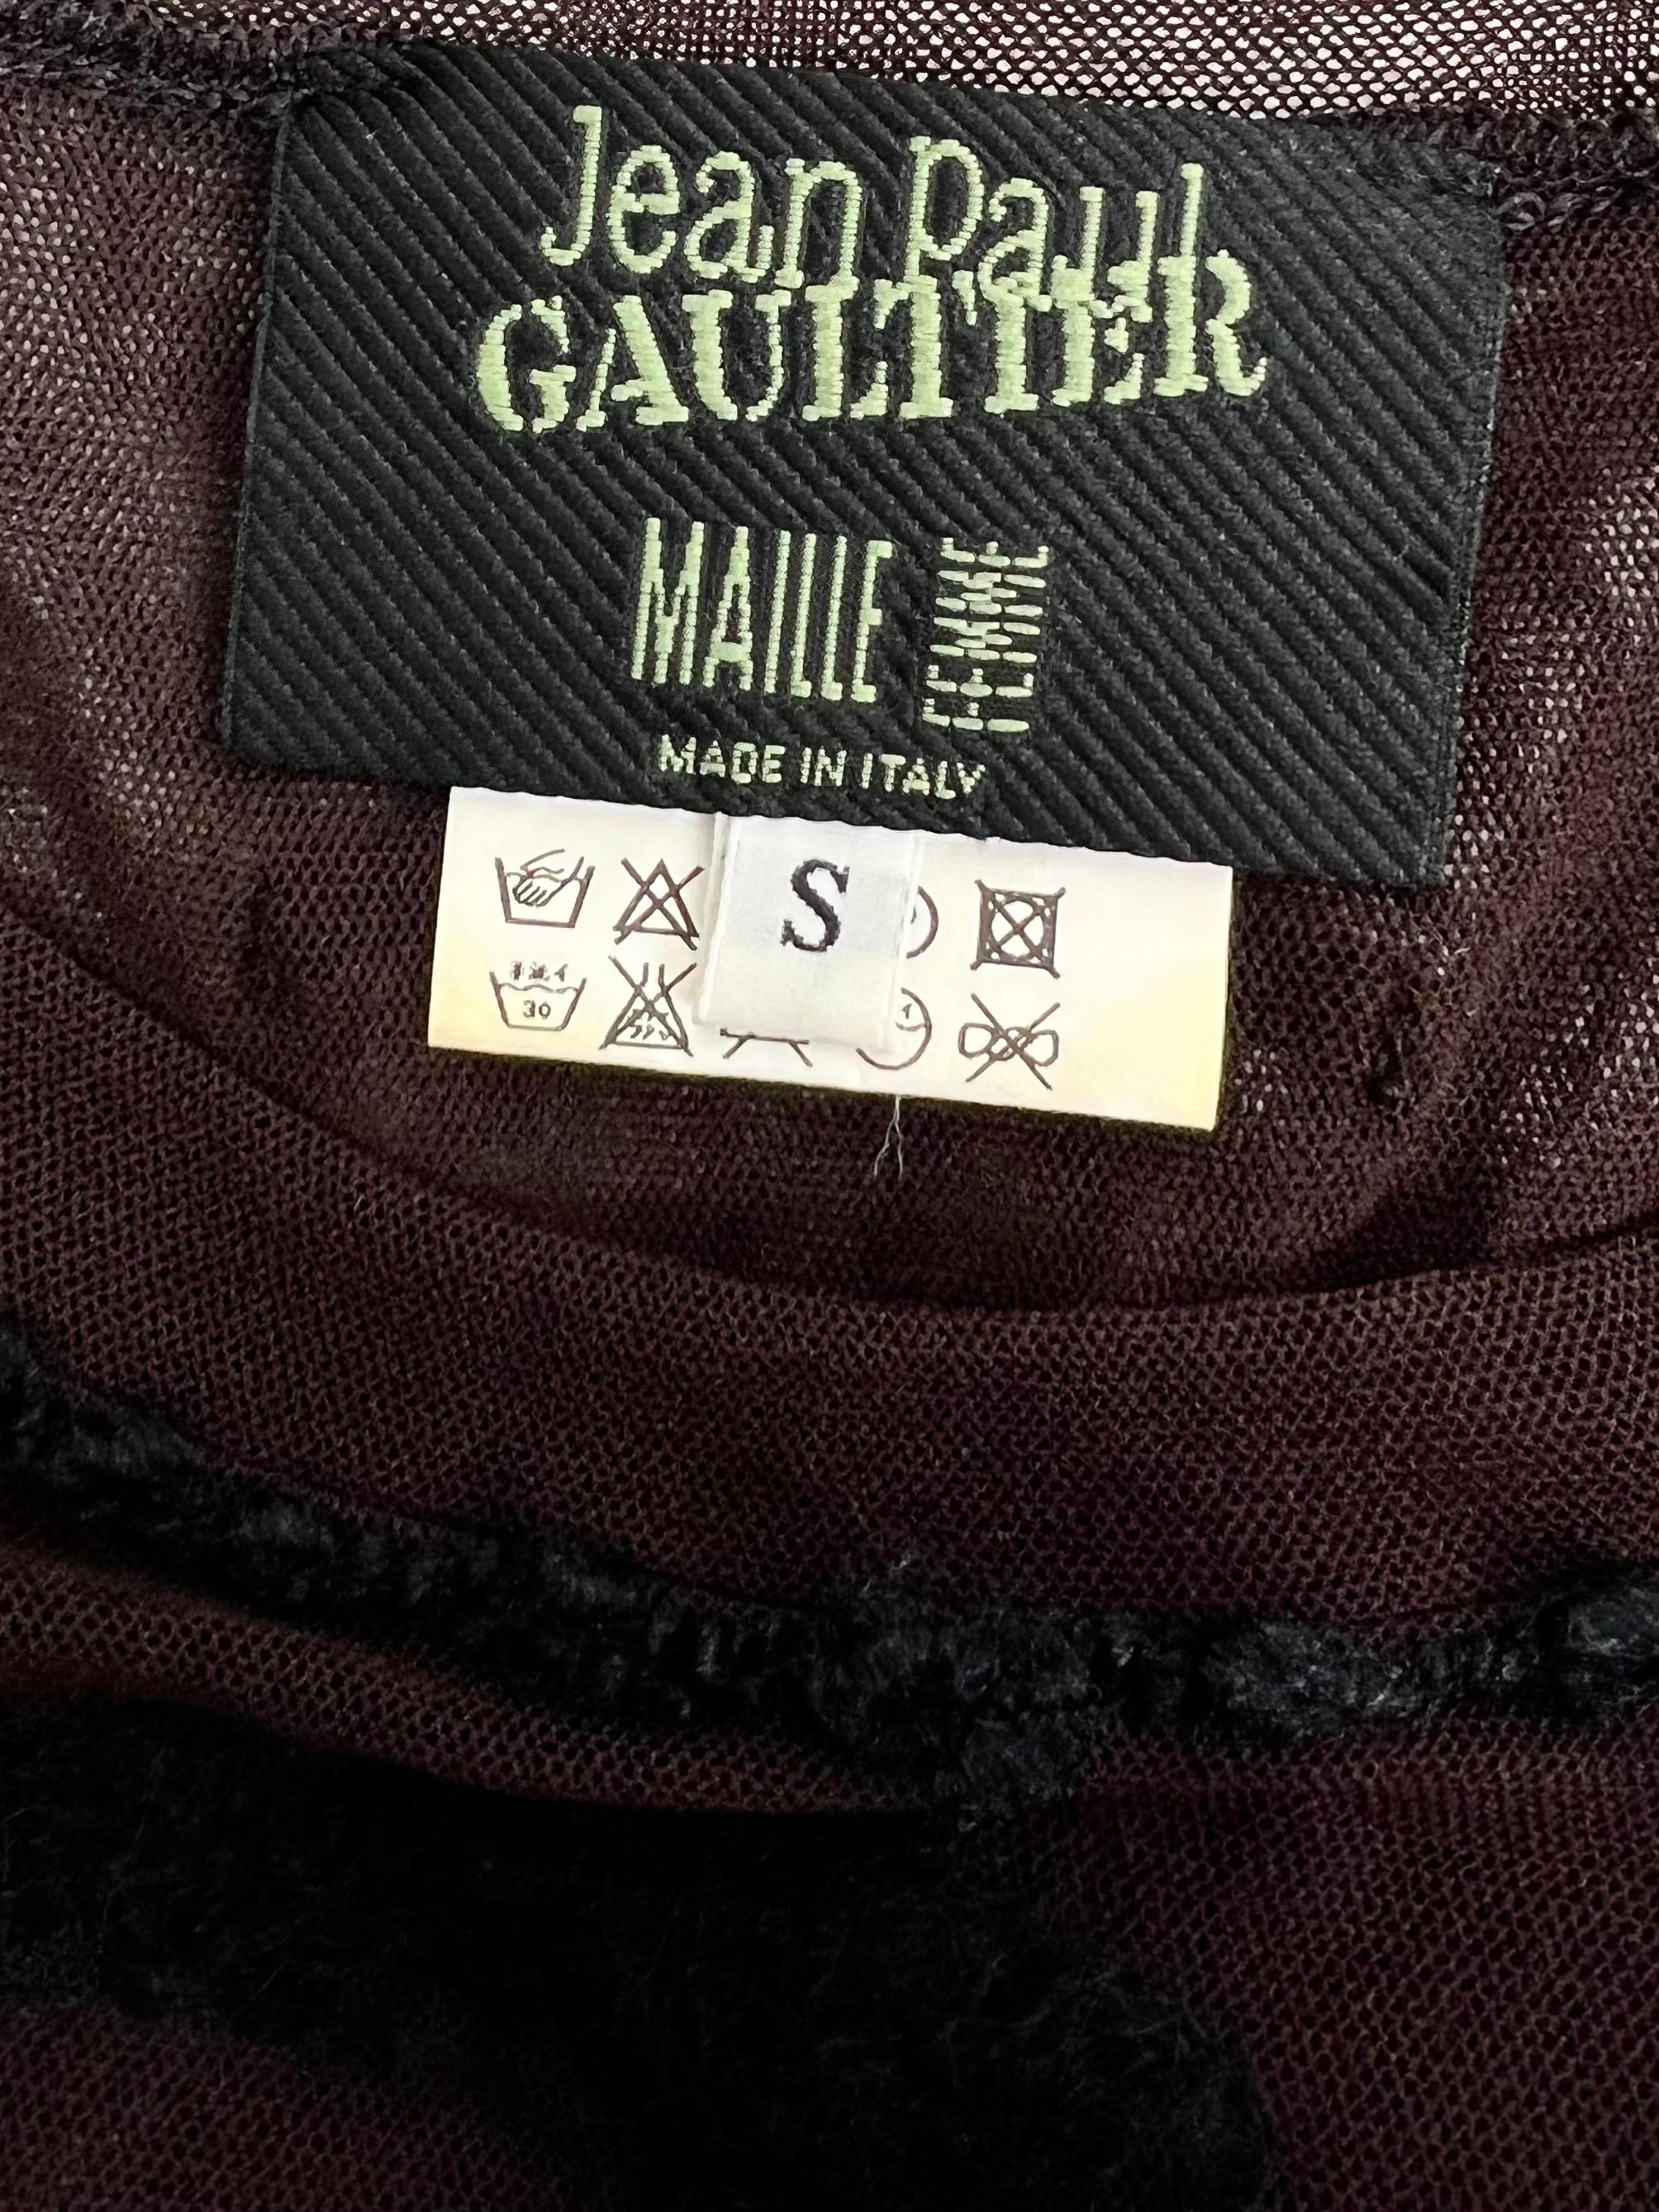 FW 2001 Jean-Paul Gaultier Manuscript Mesh Dress 1